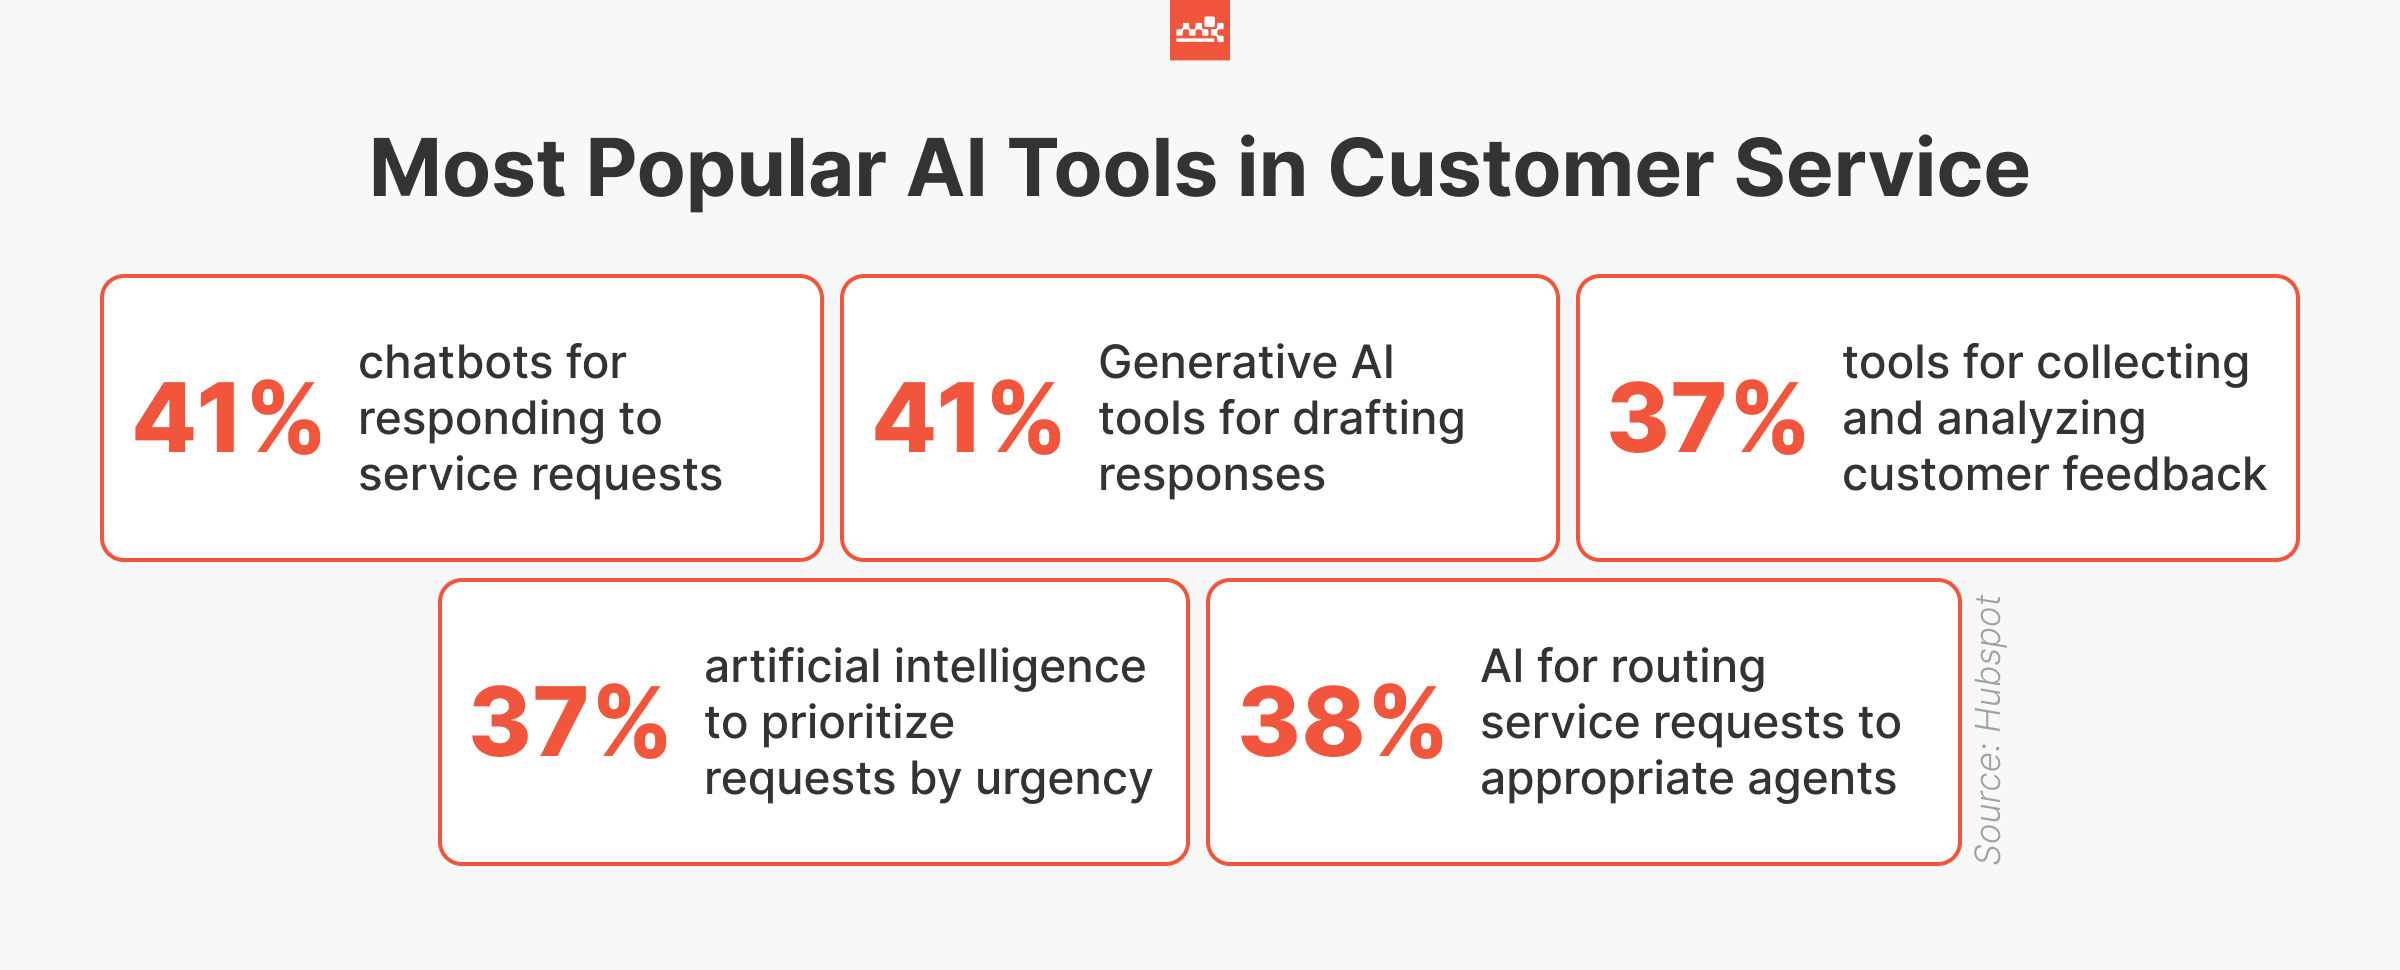 Top Popular AI Tools in Customer Service